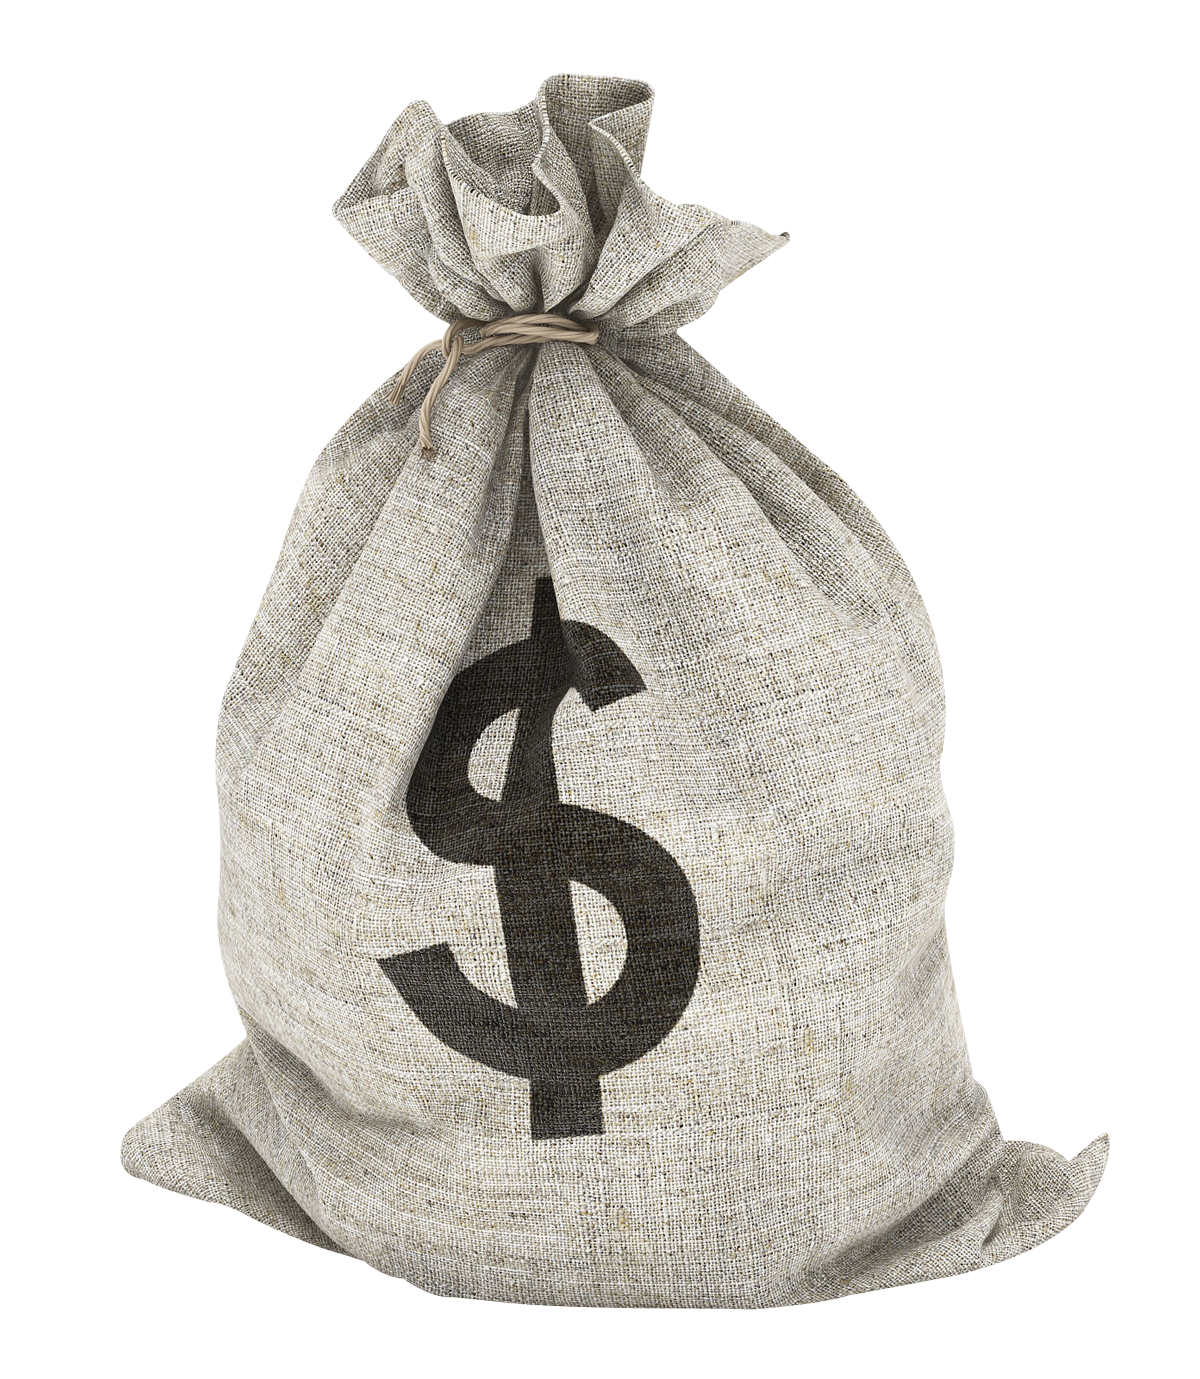 Money Bag PNG Image. Money bag, Dollar money, Money design